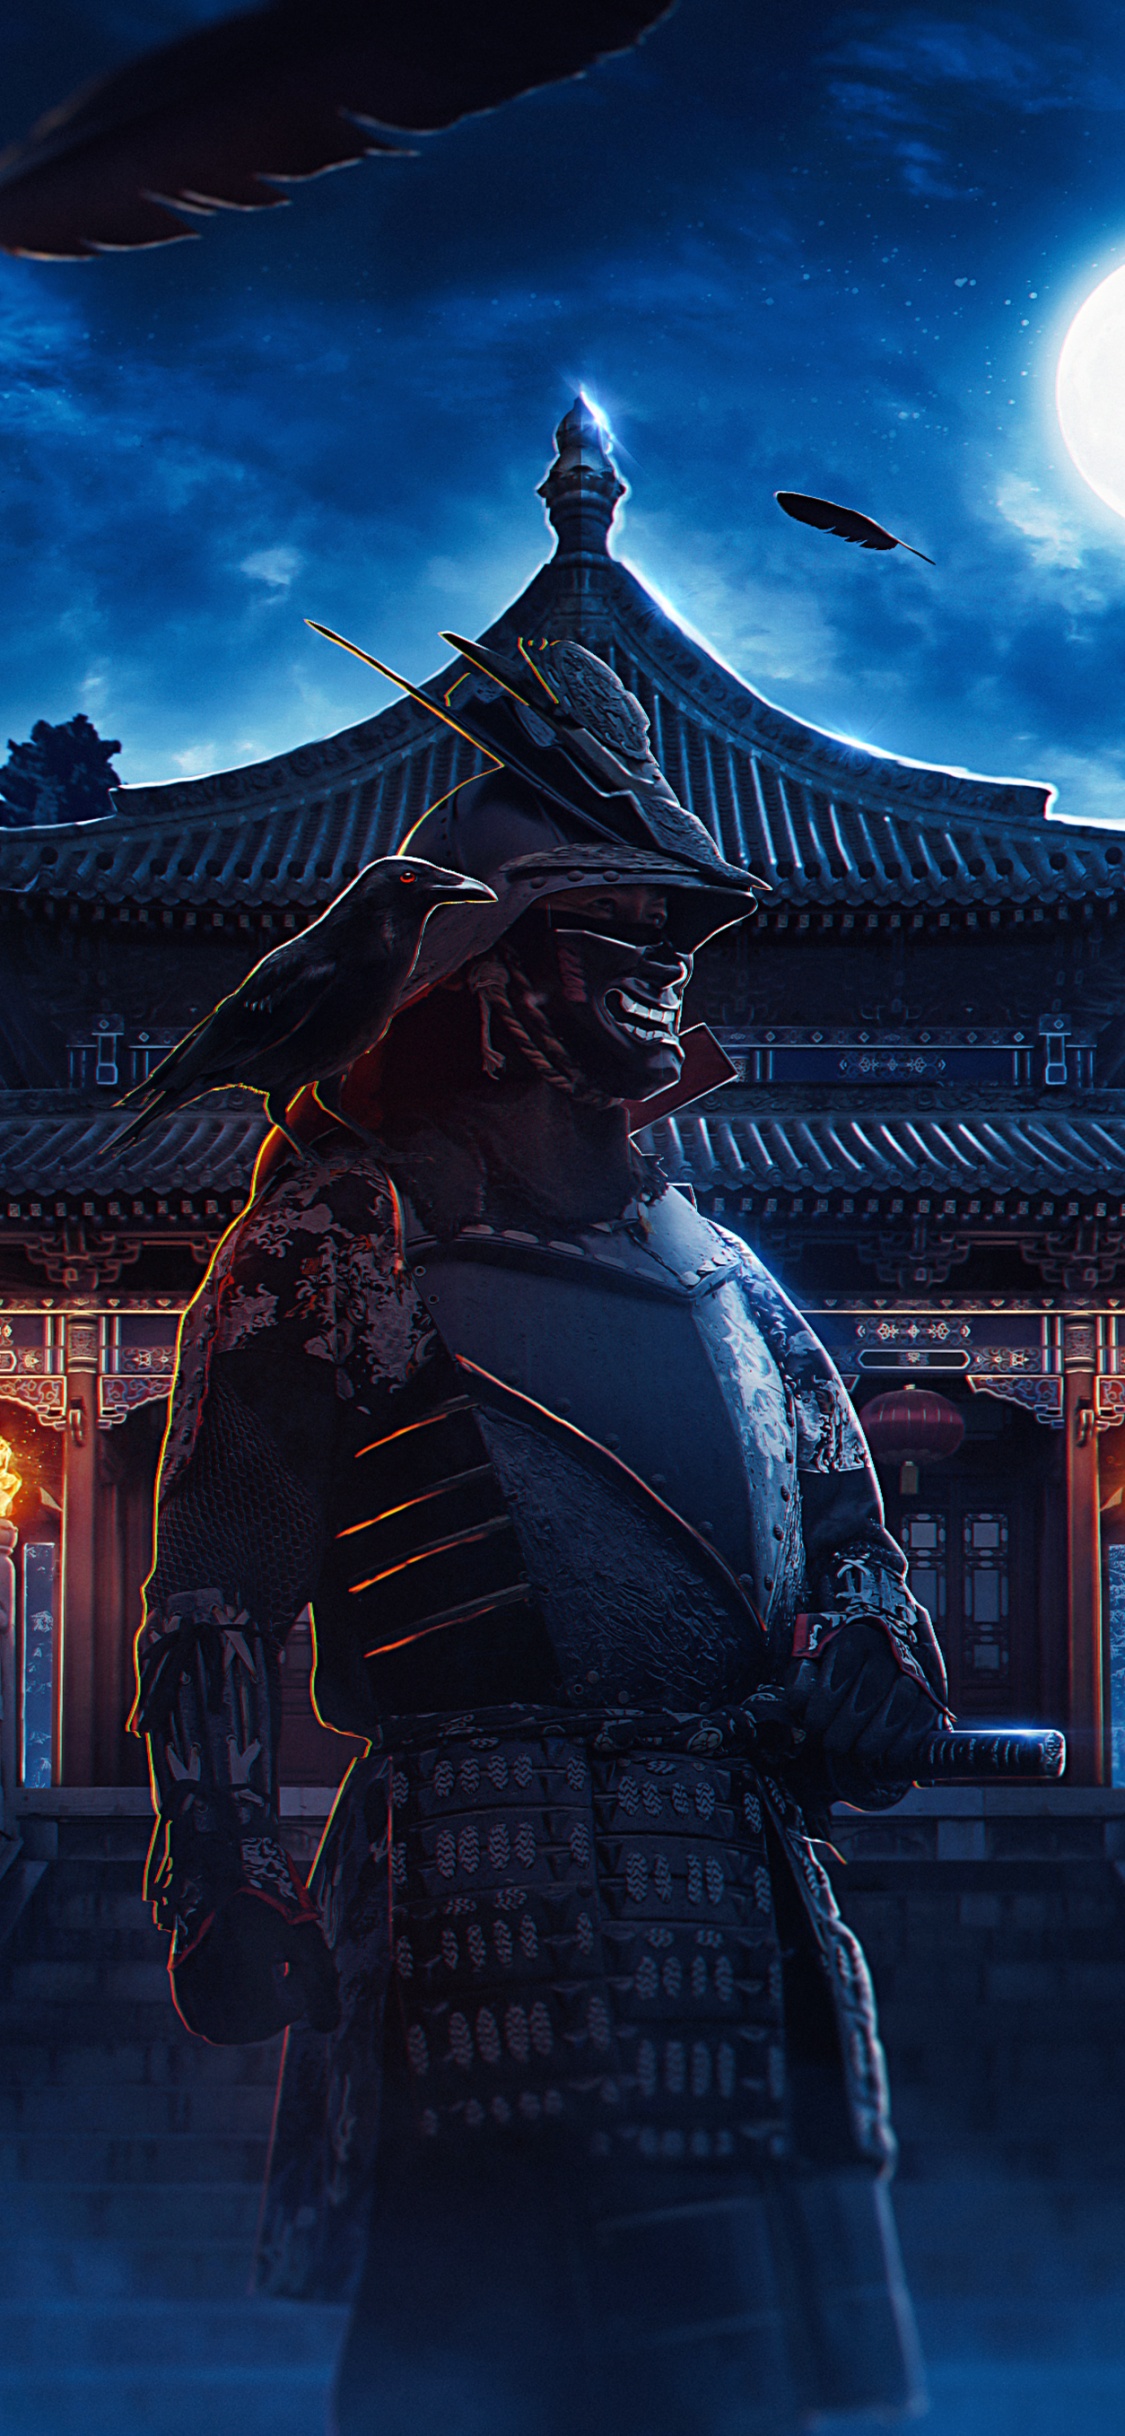 samurai-wallpaper-4k-bushido-warrior-japan-graphics-cgi-5032